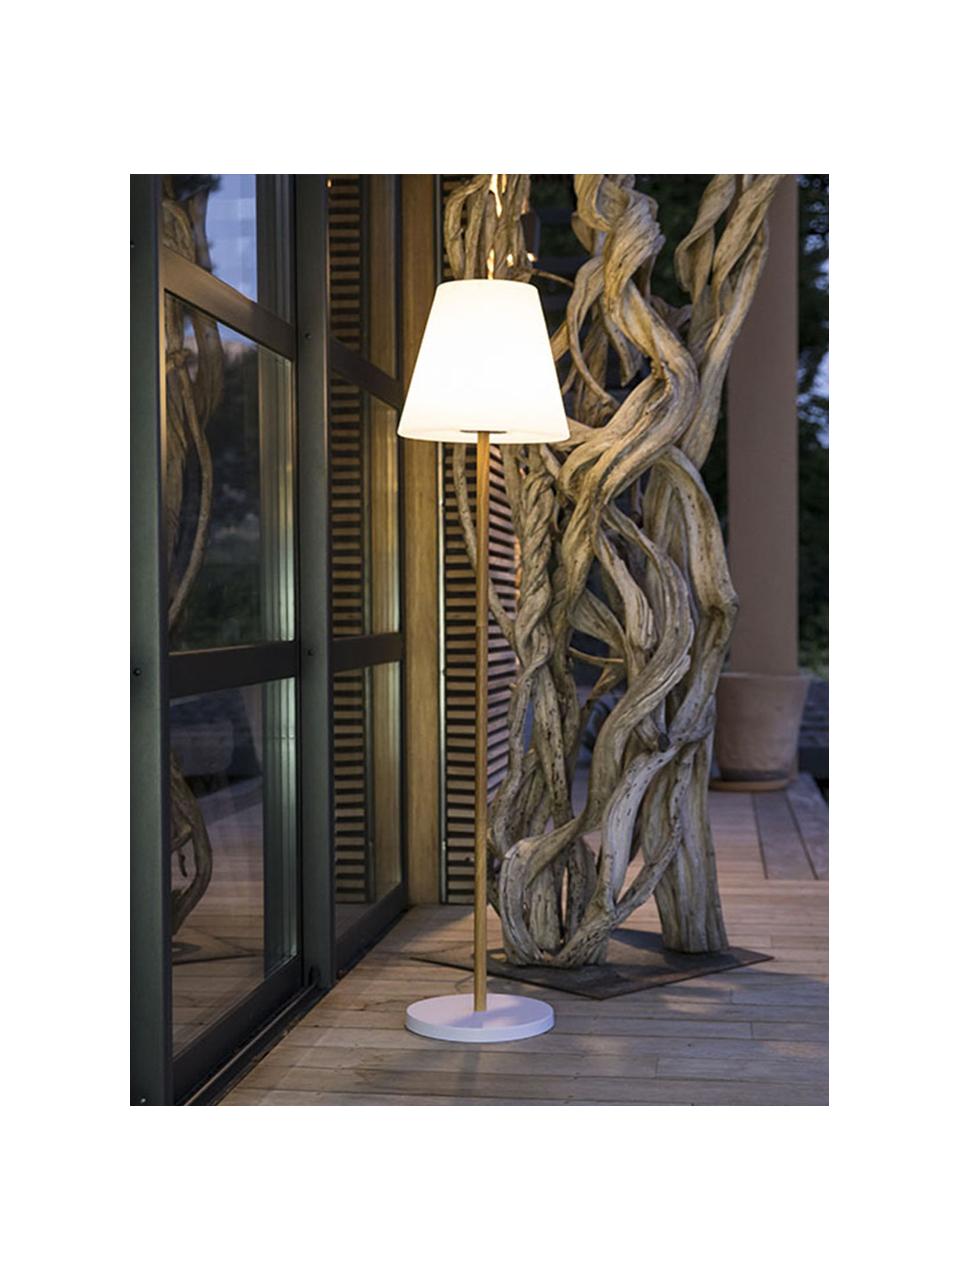 Lámpara de pie solar regulable de madera Standby, Pantalla: polietileno, Blanco, beige, Ø 34 x Al 150 cm